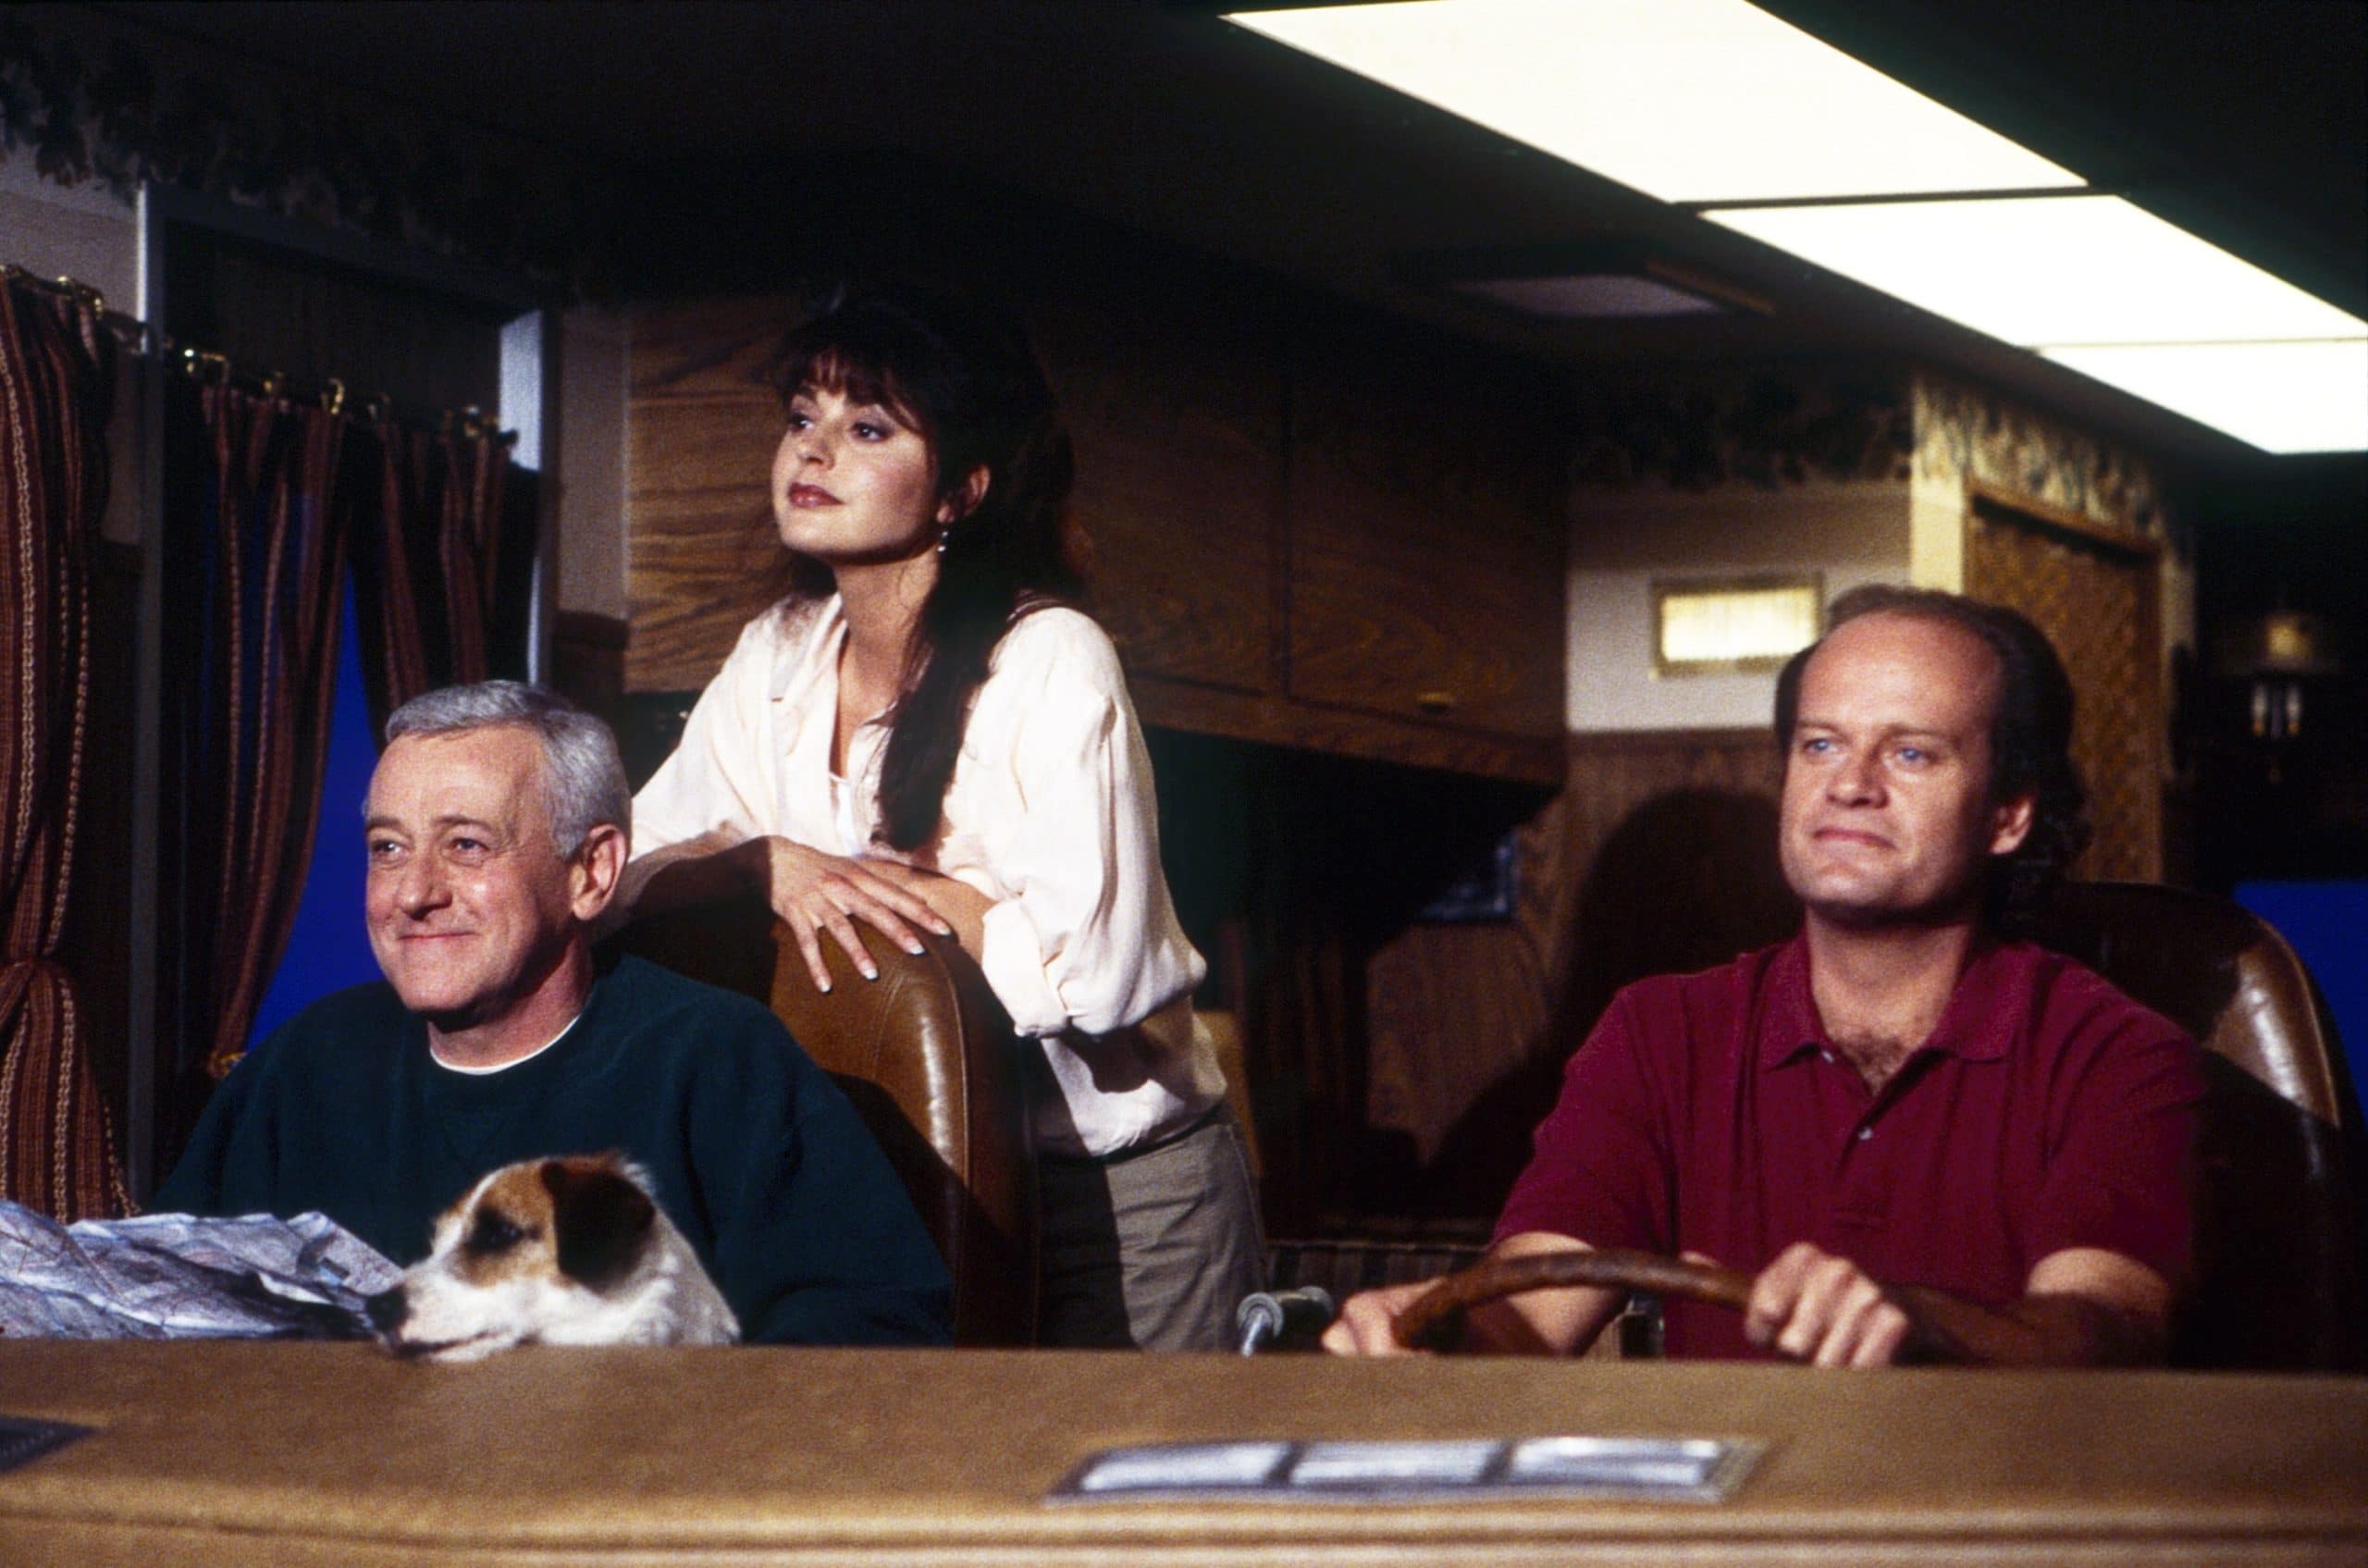 FRASIER, from left: John Mahoney, Jane Leeves, Kelsey Grammer, with Moose, as Eddie